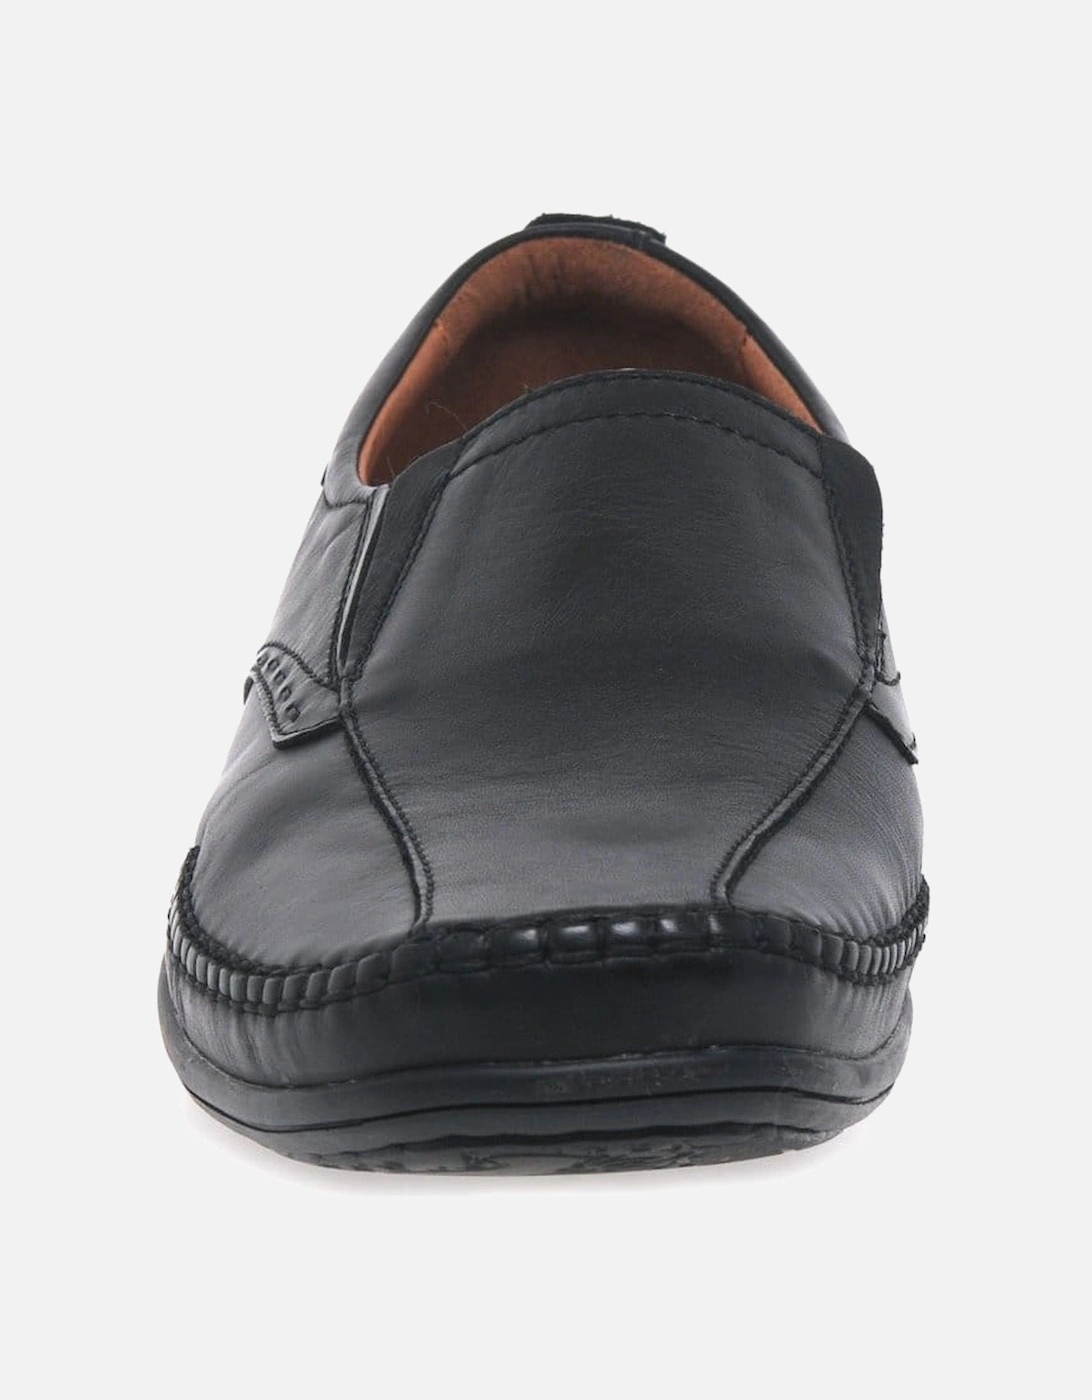 Ricardo Mens Slip On Casual Shoes